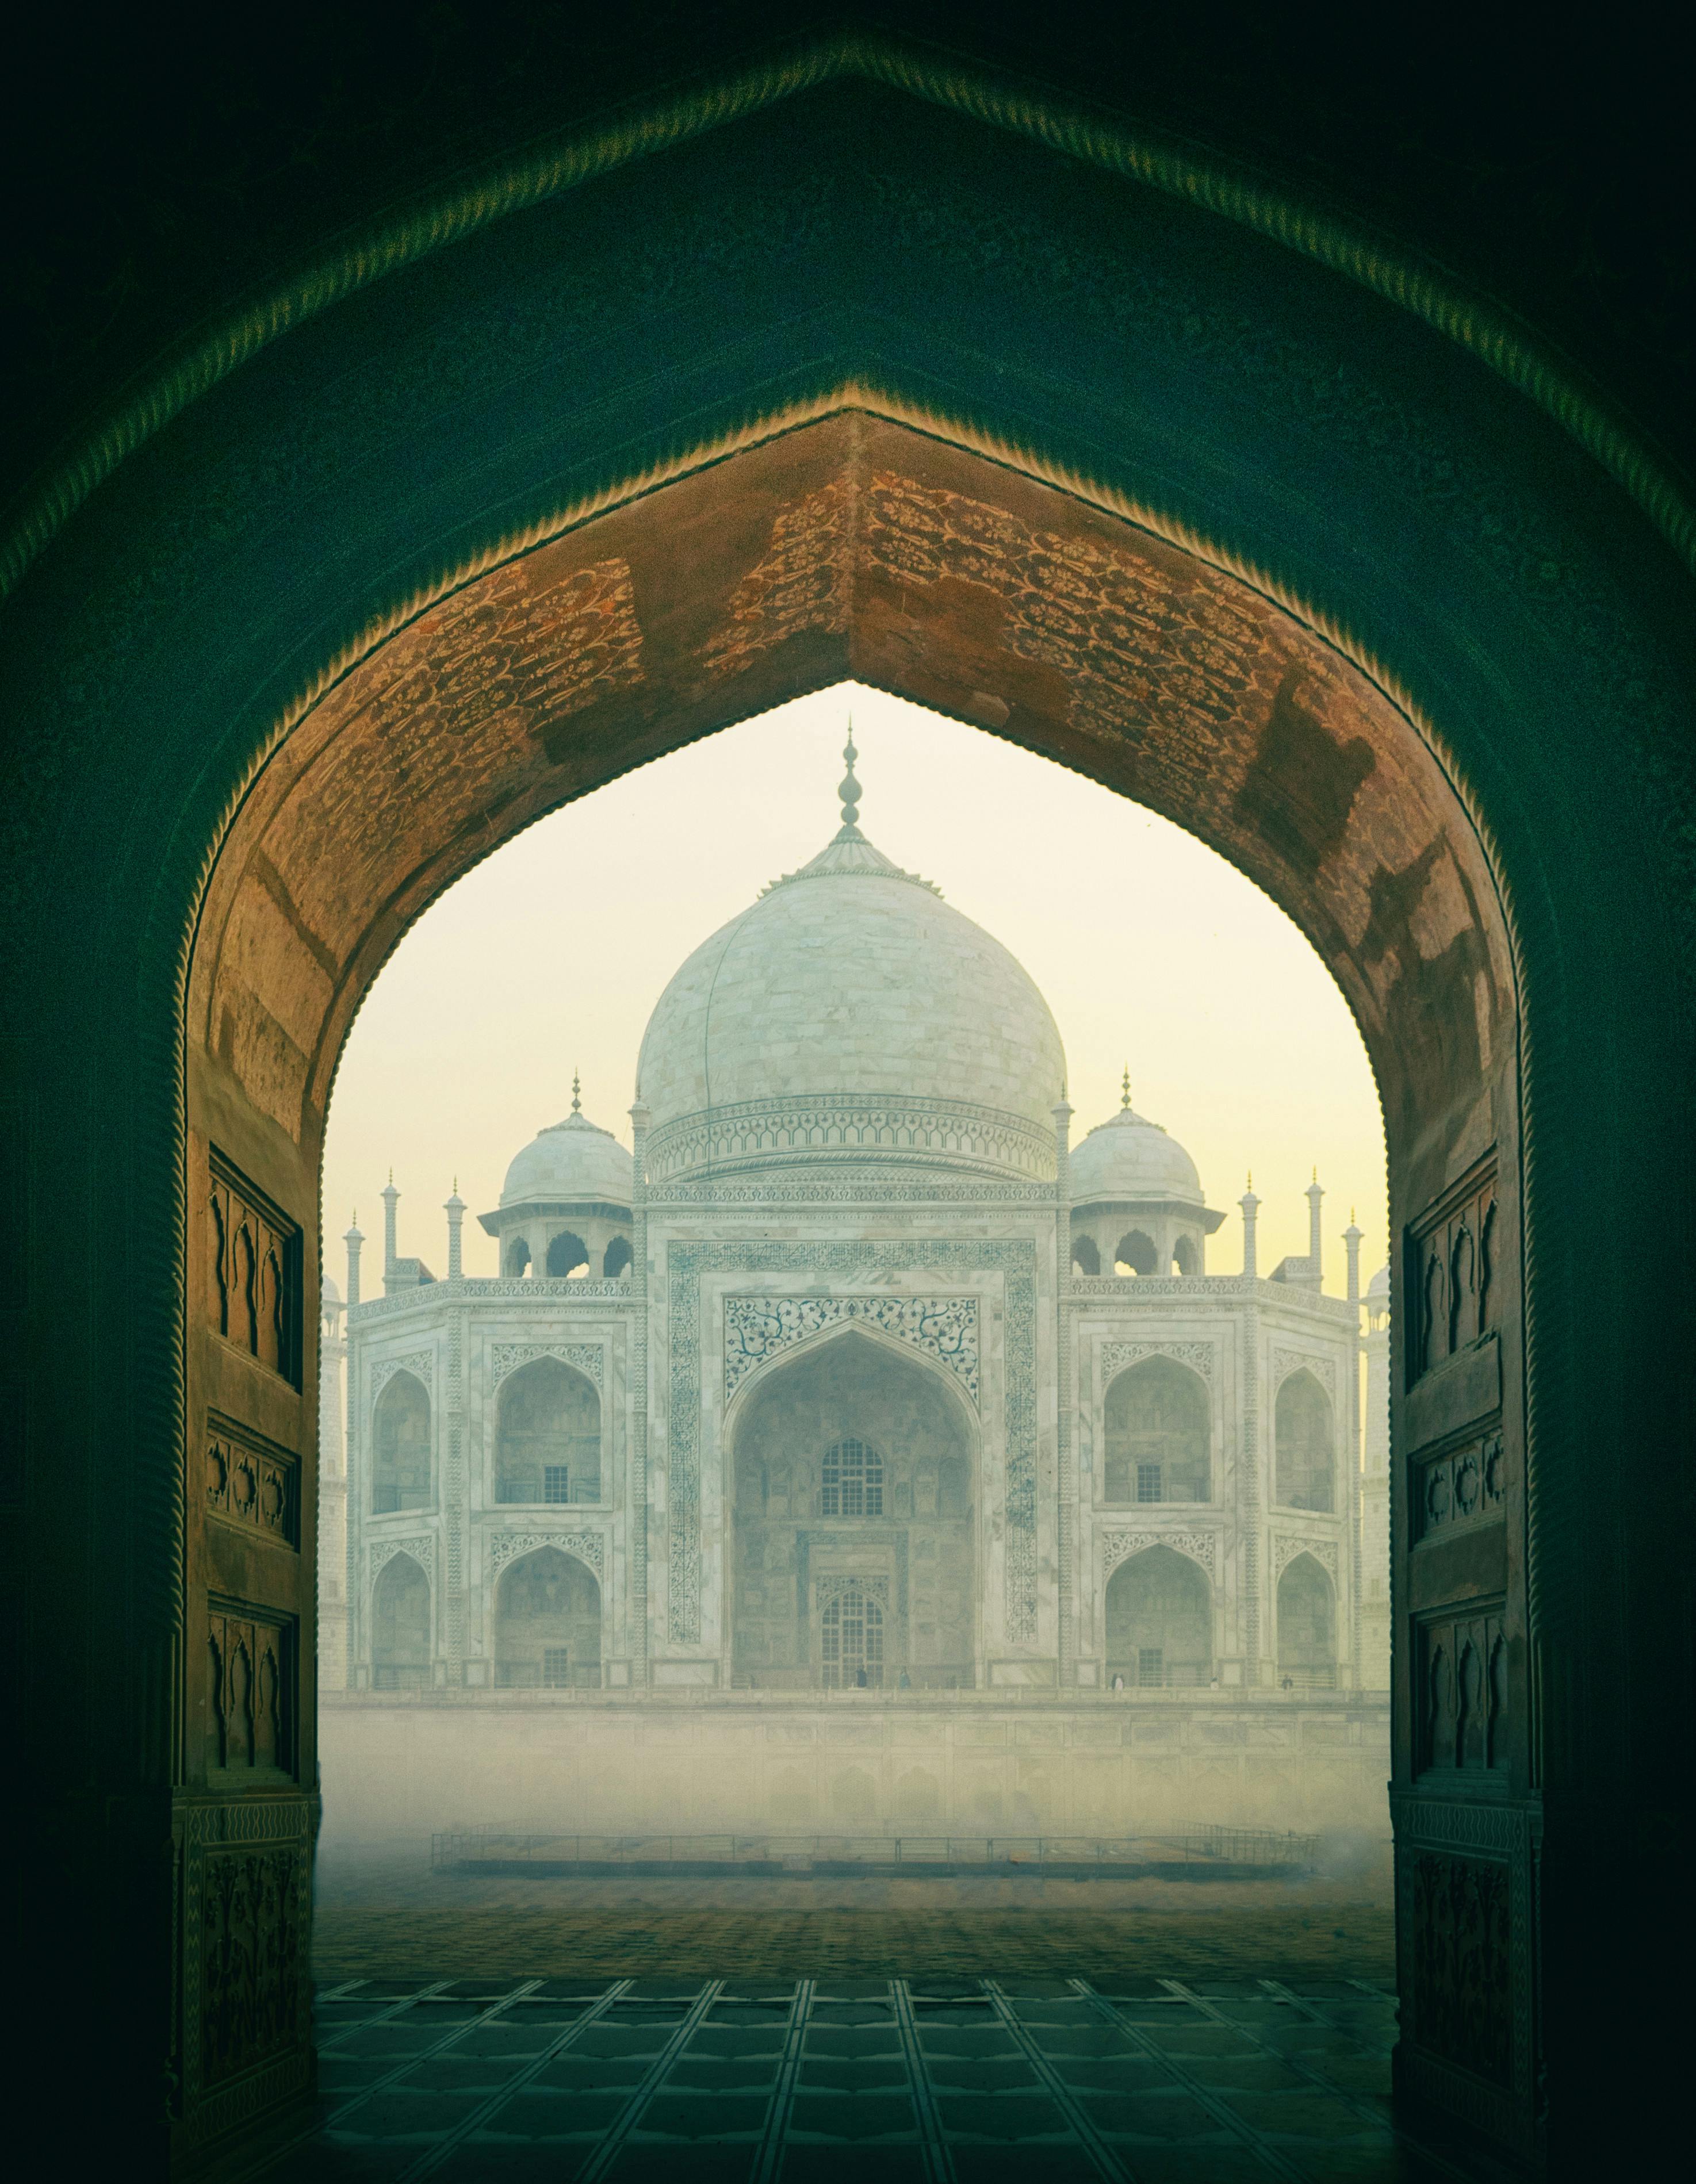 Taj Mahal Photos, Download The BEST Free Taj Mahal Stock Photos & HD Images